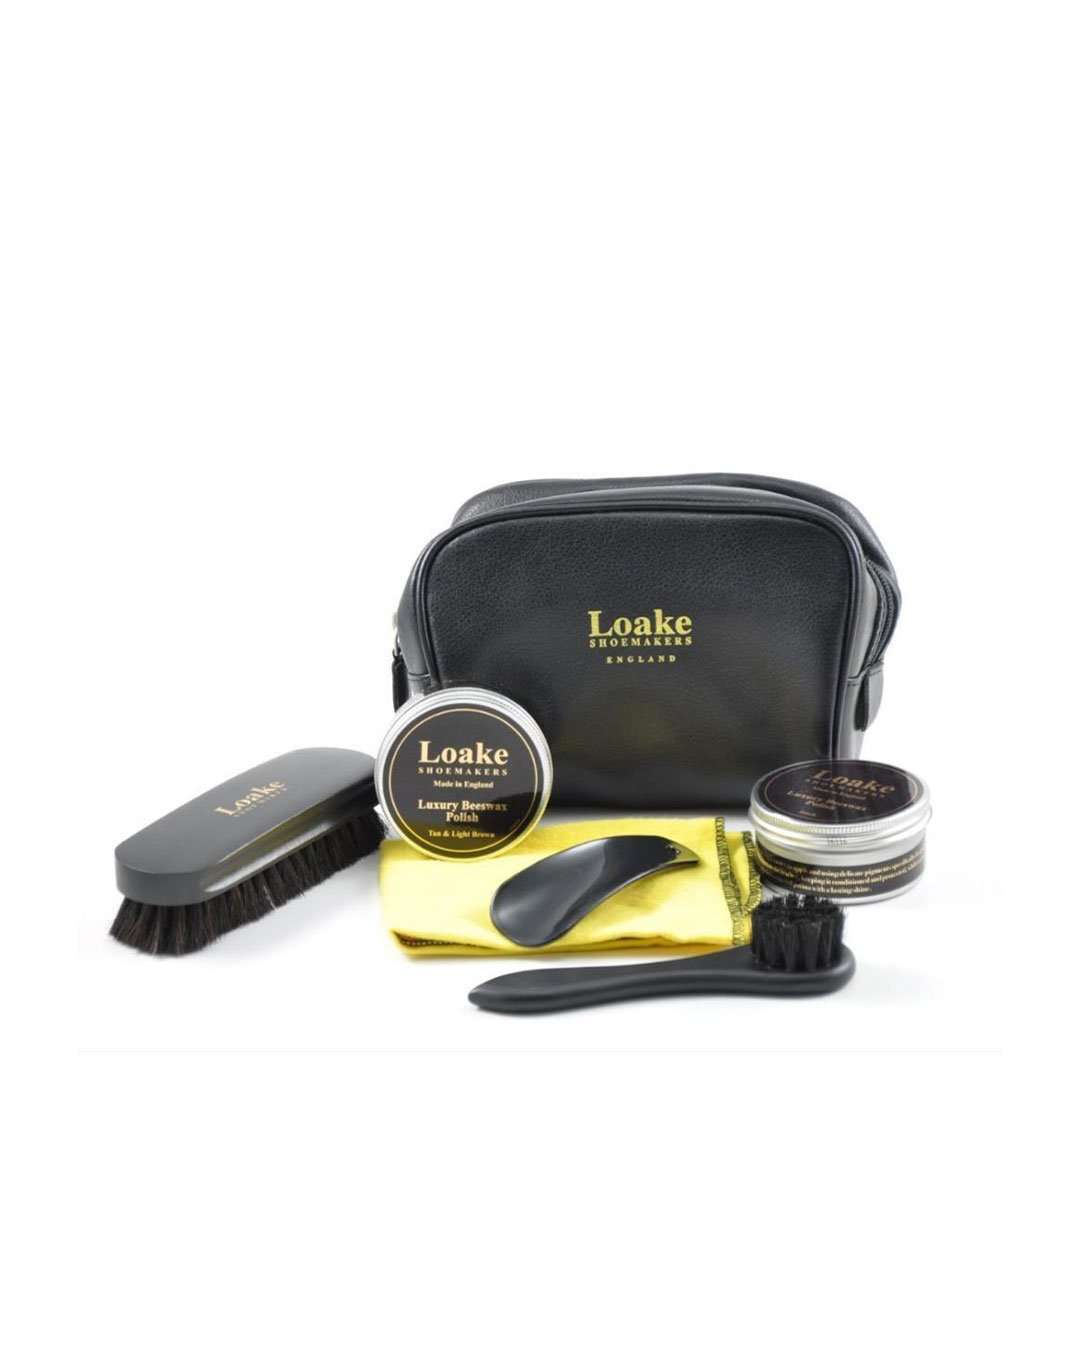 loake shoe cleaning kit